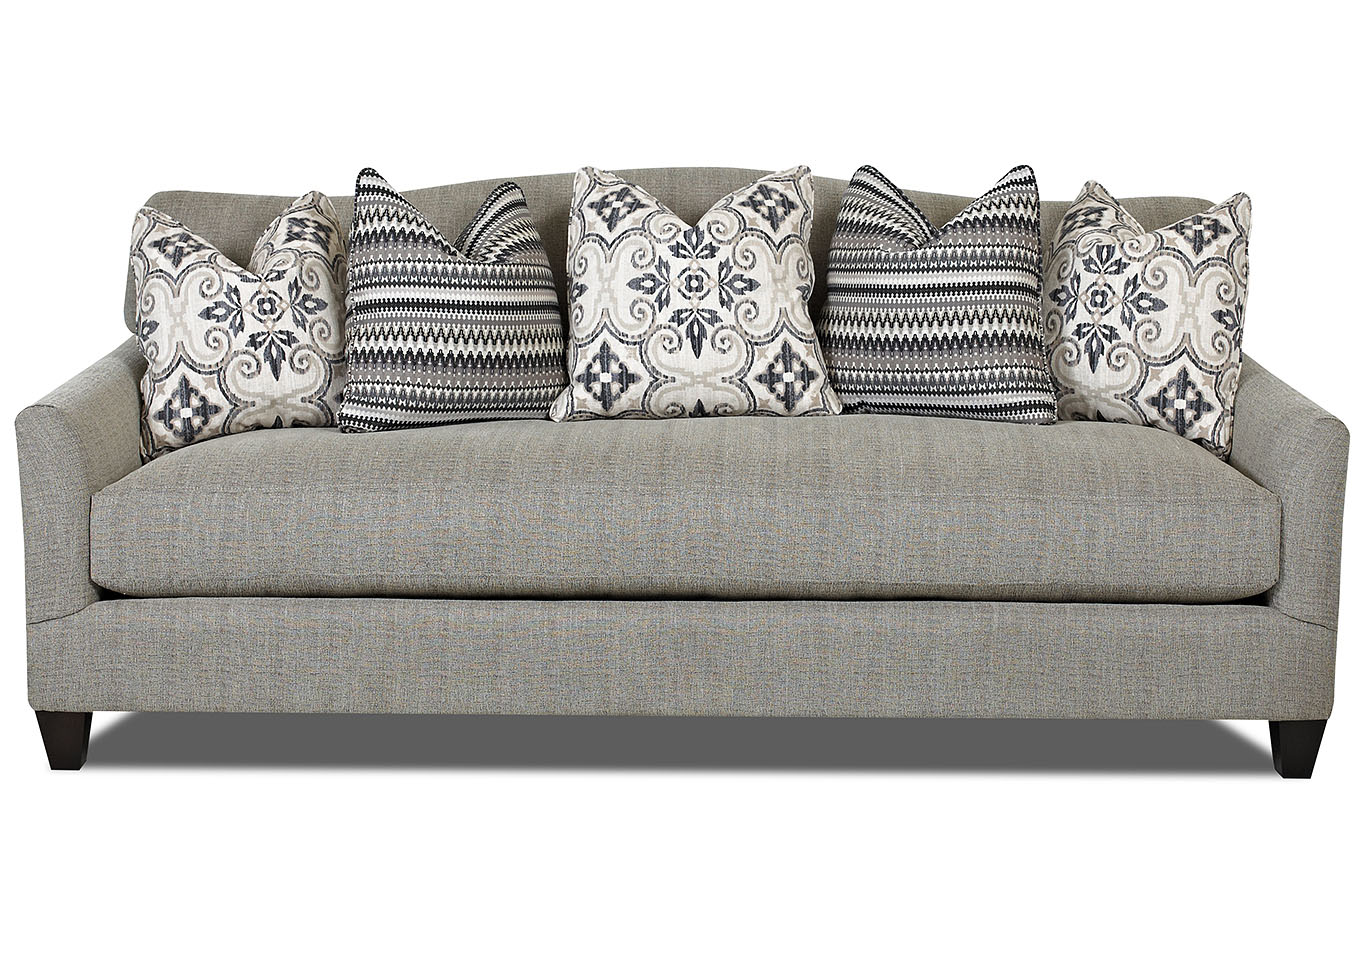 Leighton Platinum Gray Stationary Fabric Sofa,Klaussner Home Furnishings